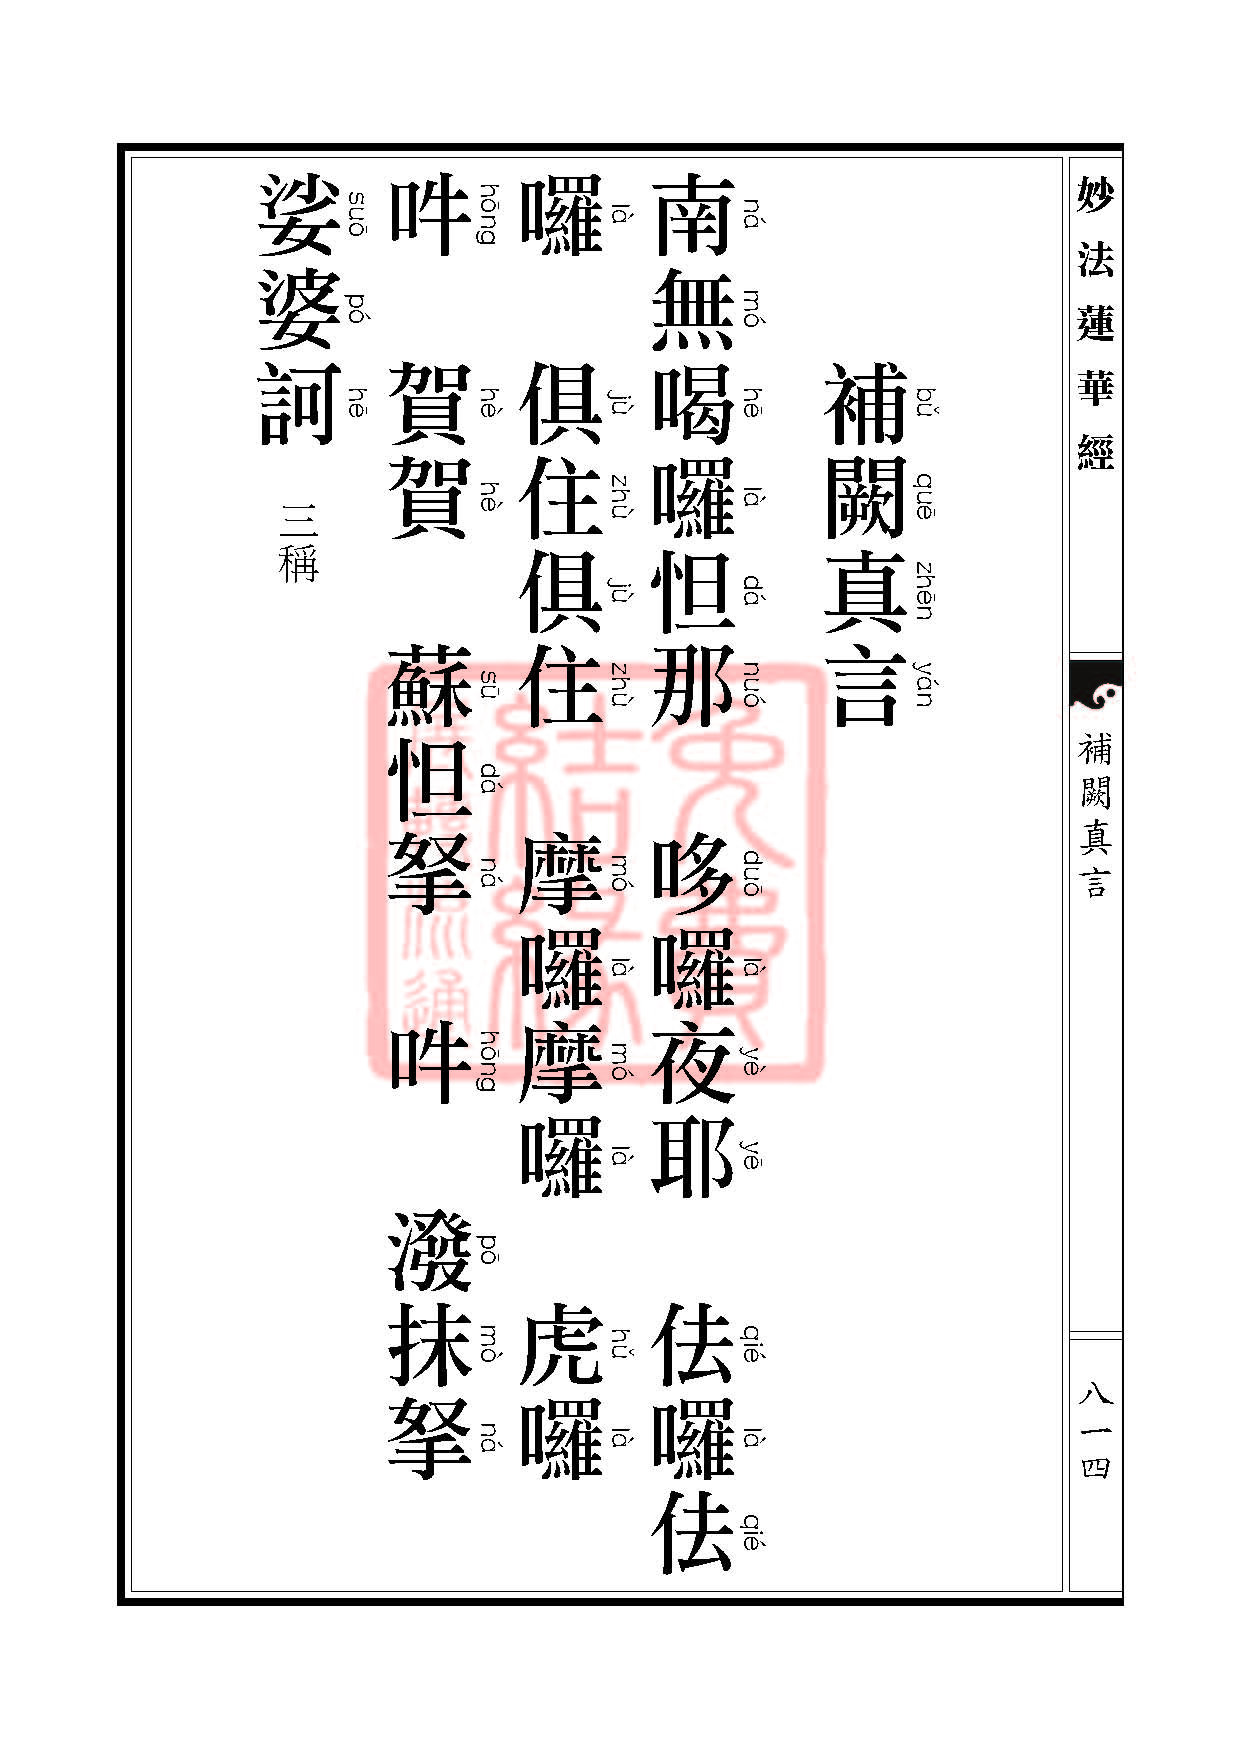 Book_FHJ_HK-A6-PY_Web__814.jpg